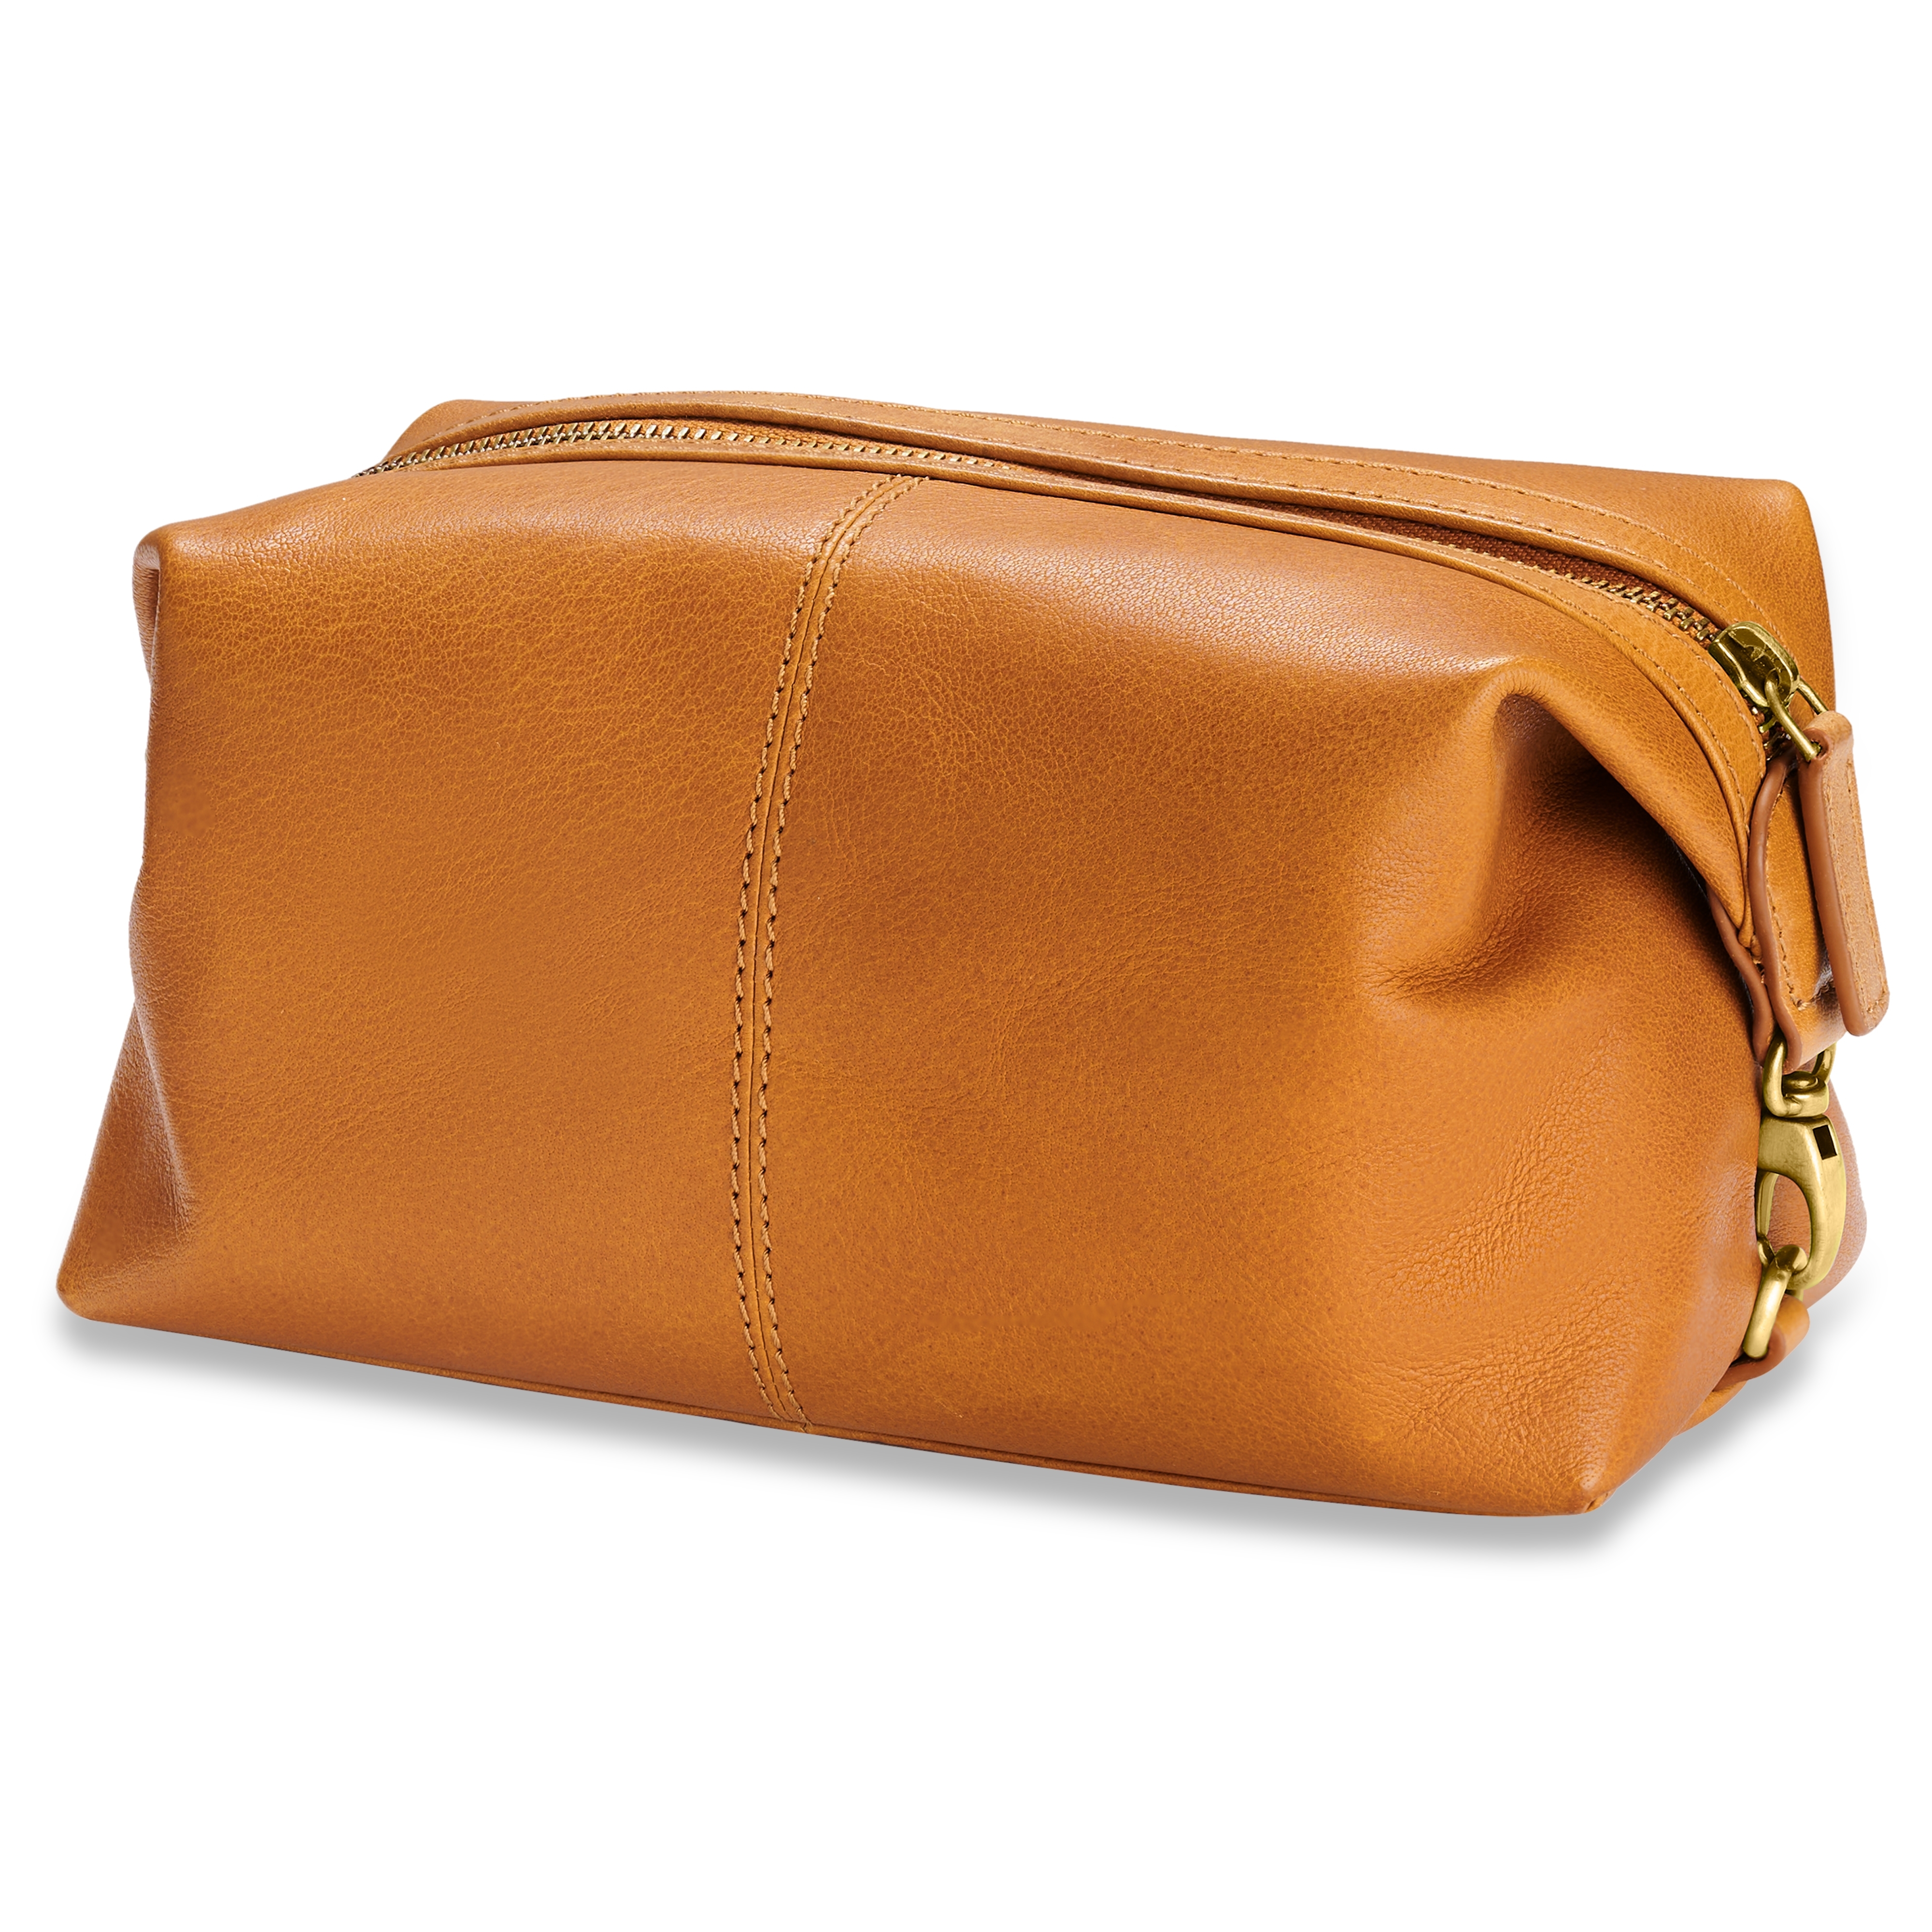 Soft Grain Leather Zip Top Cosmetic Bag - Smith & Canova